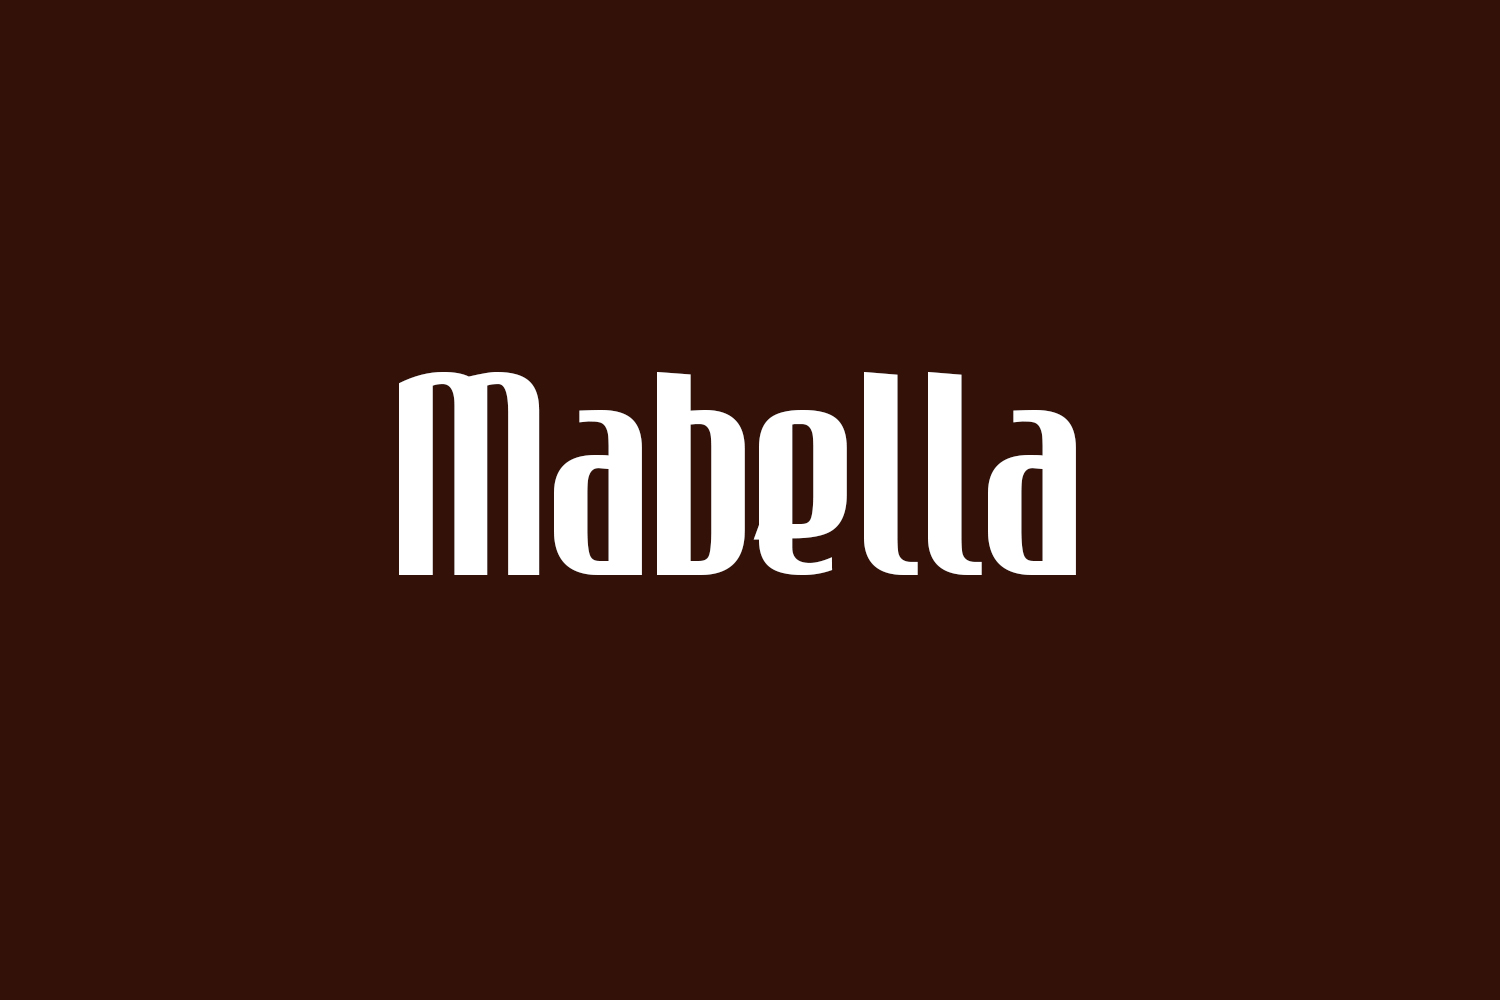 Mabella Free Font